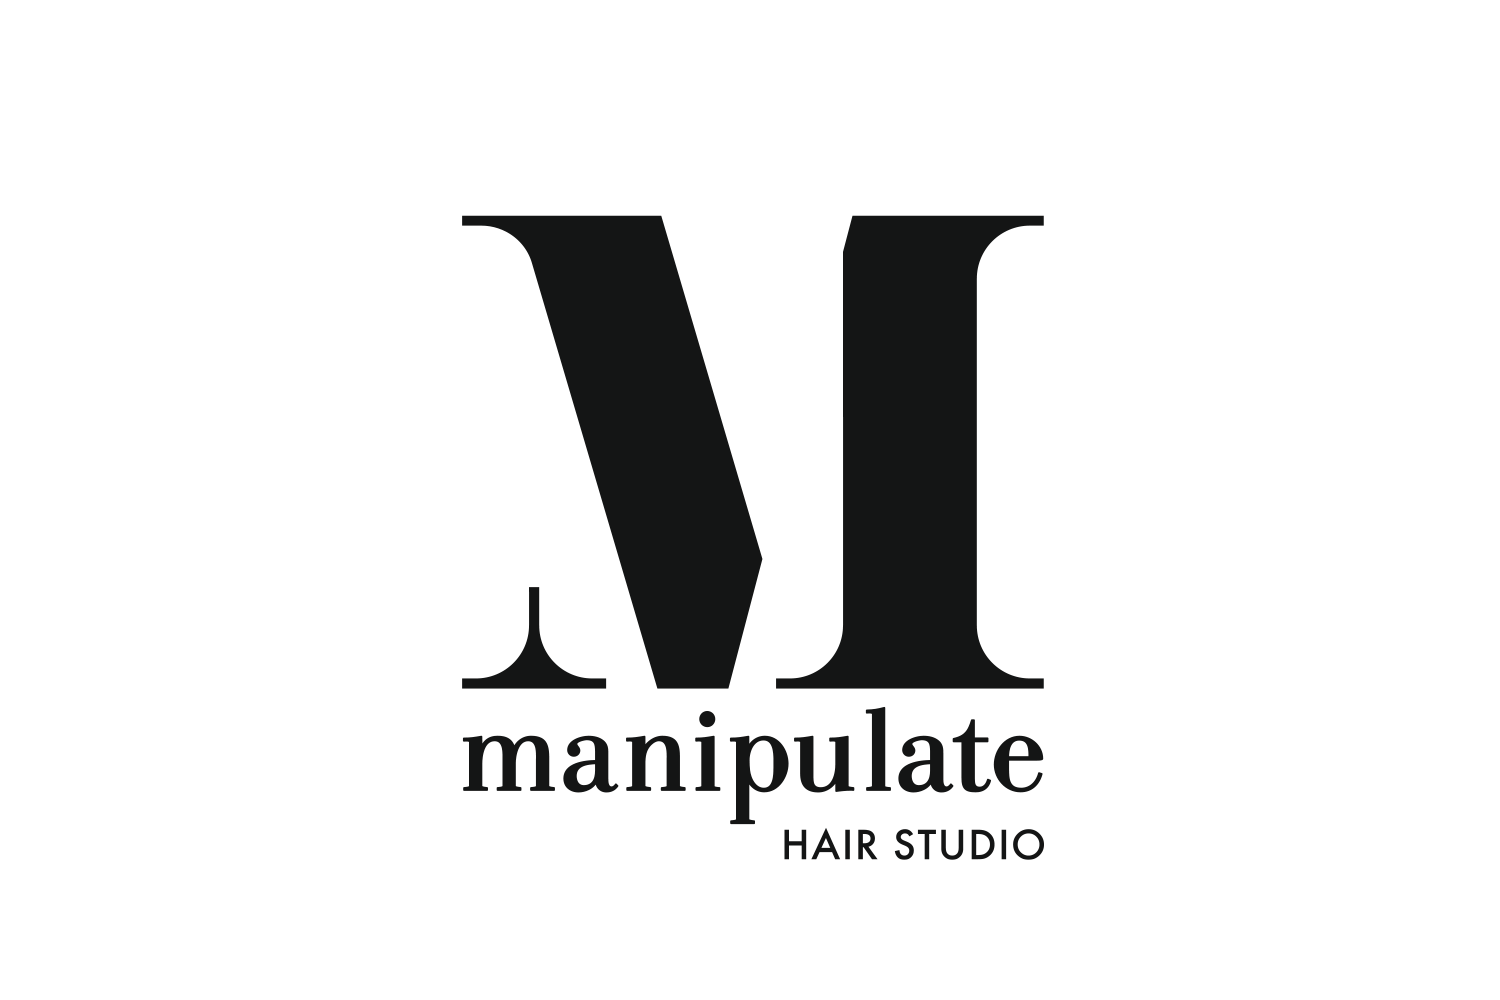 MHS-001-25256-Manipulate_Logo_Comparison-After.png